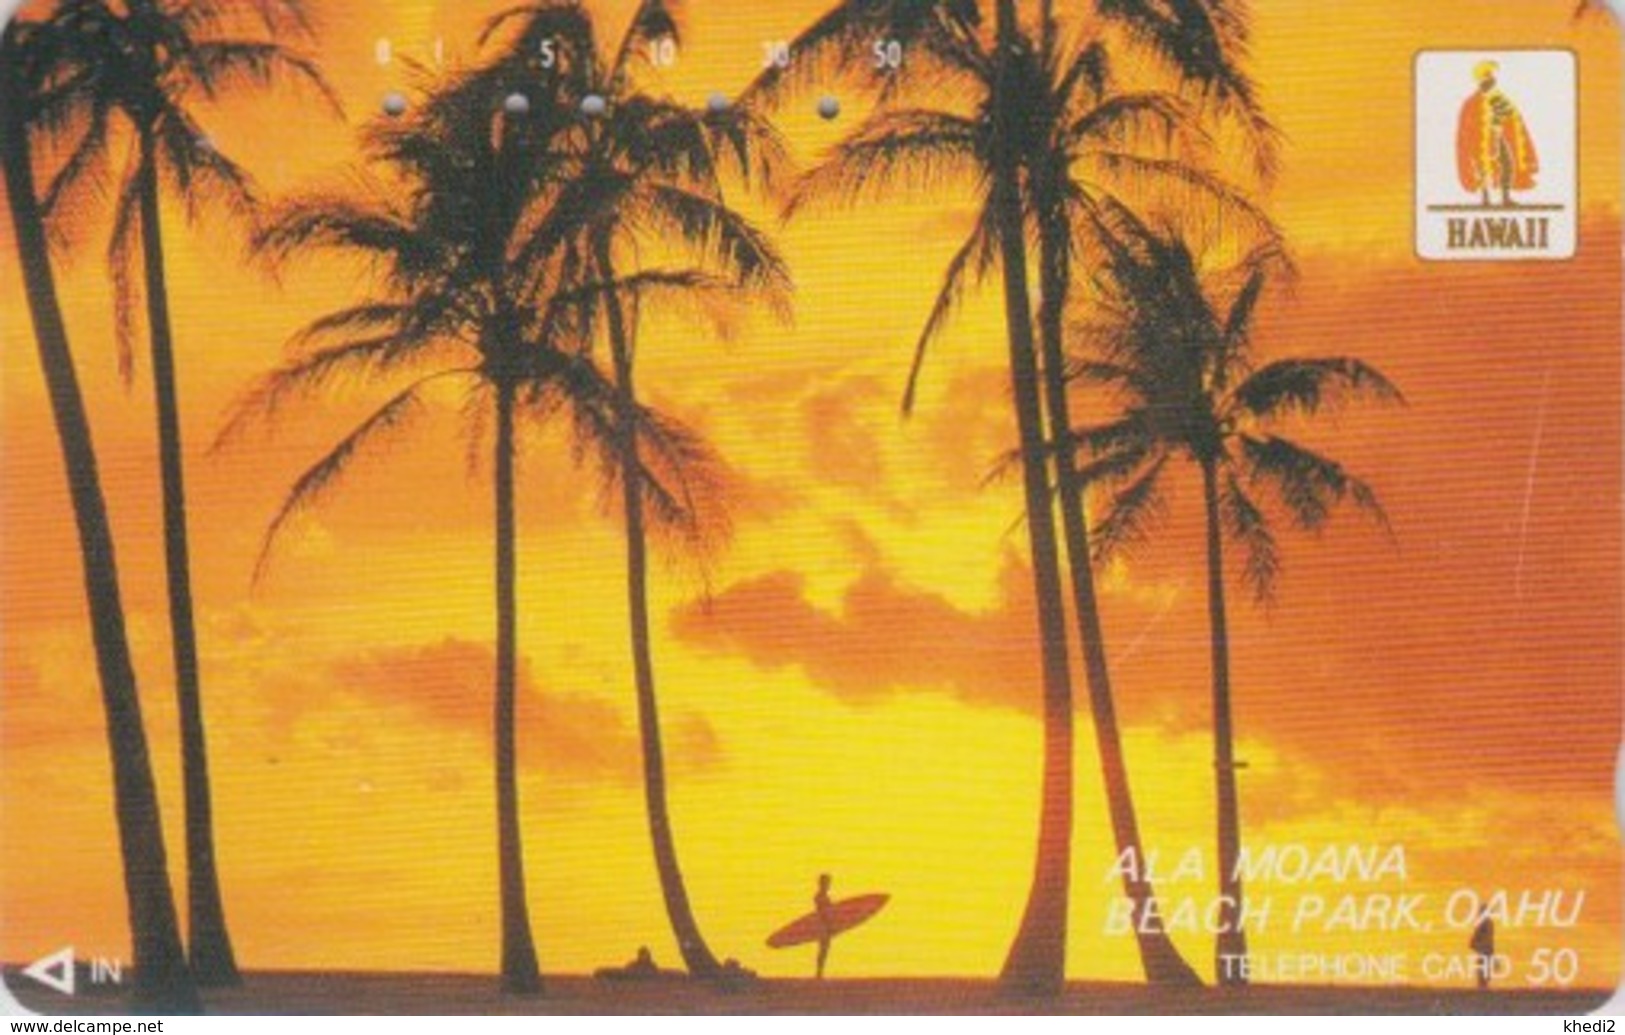 Télécarte Japon / 110-33813 - Site HAWAII - Série KING LOGO ROI 2 - ALA MOANA BEACH OAHU SUNSET SURF Japan Phonecard 508 - Paysages